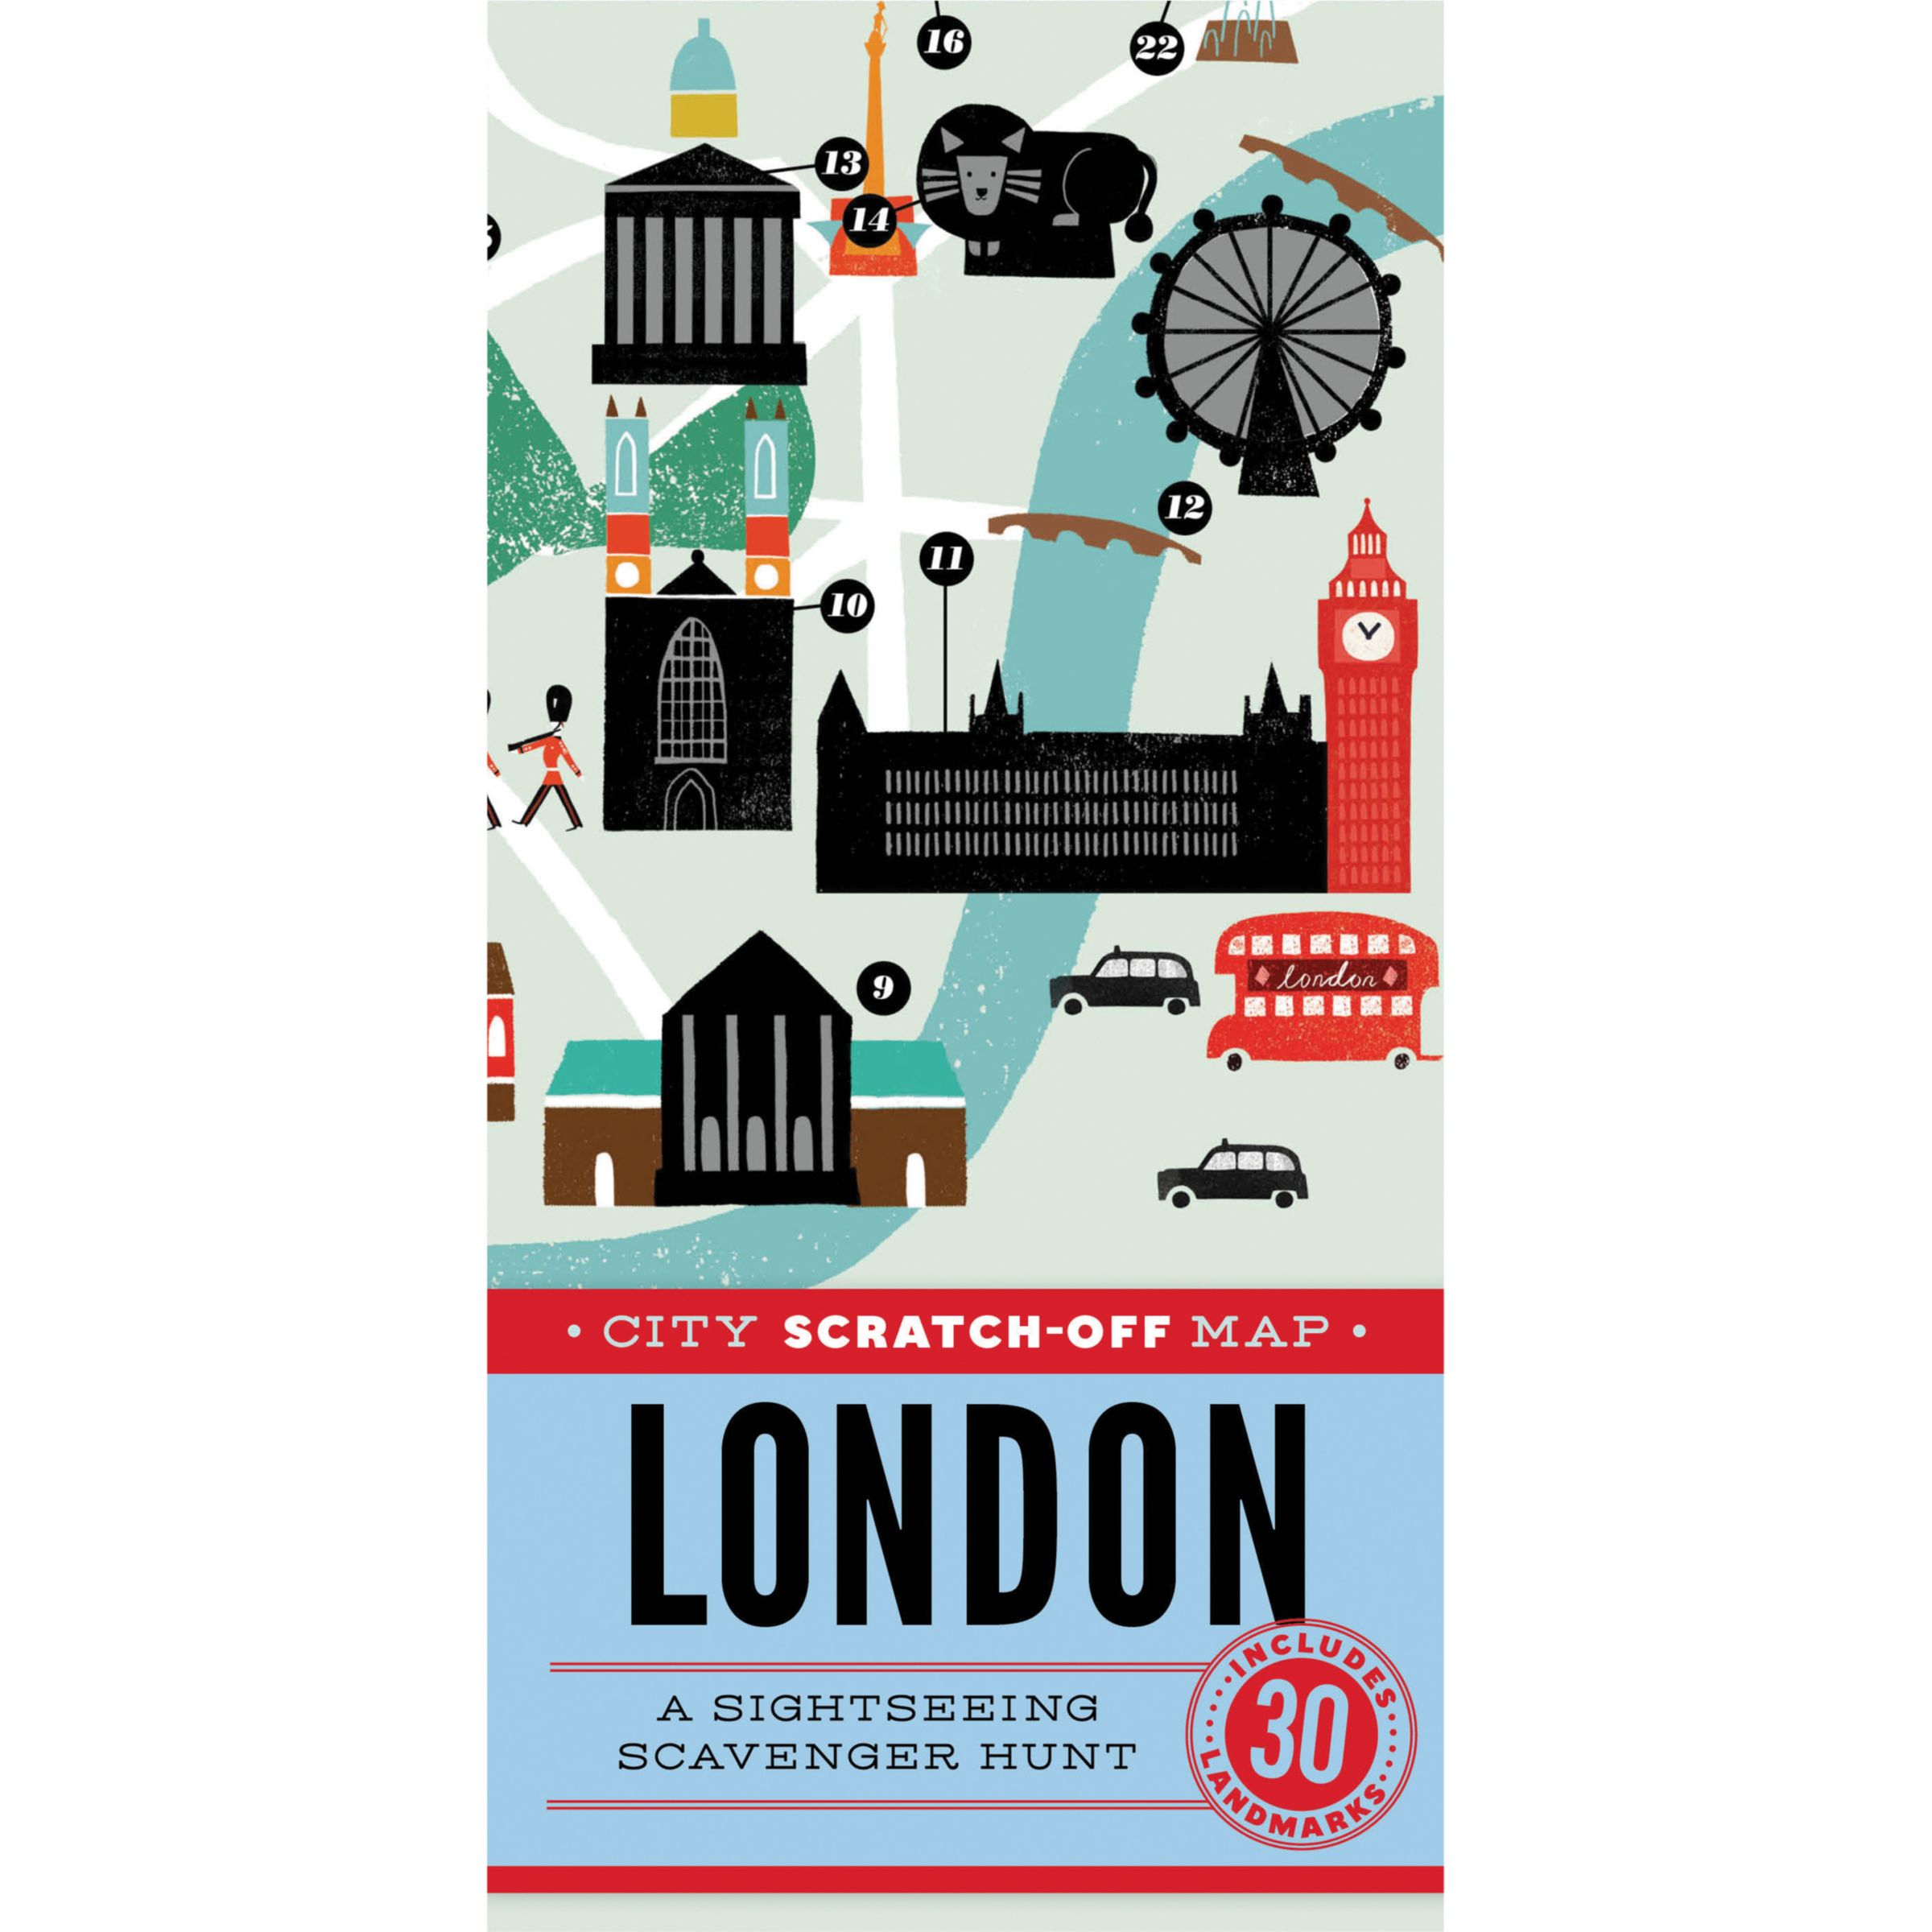 City Scratch-off Map: London (£10)